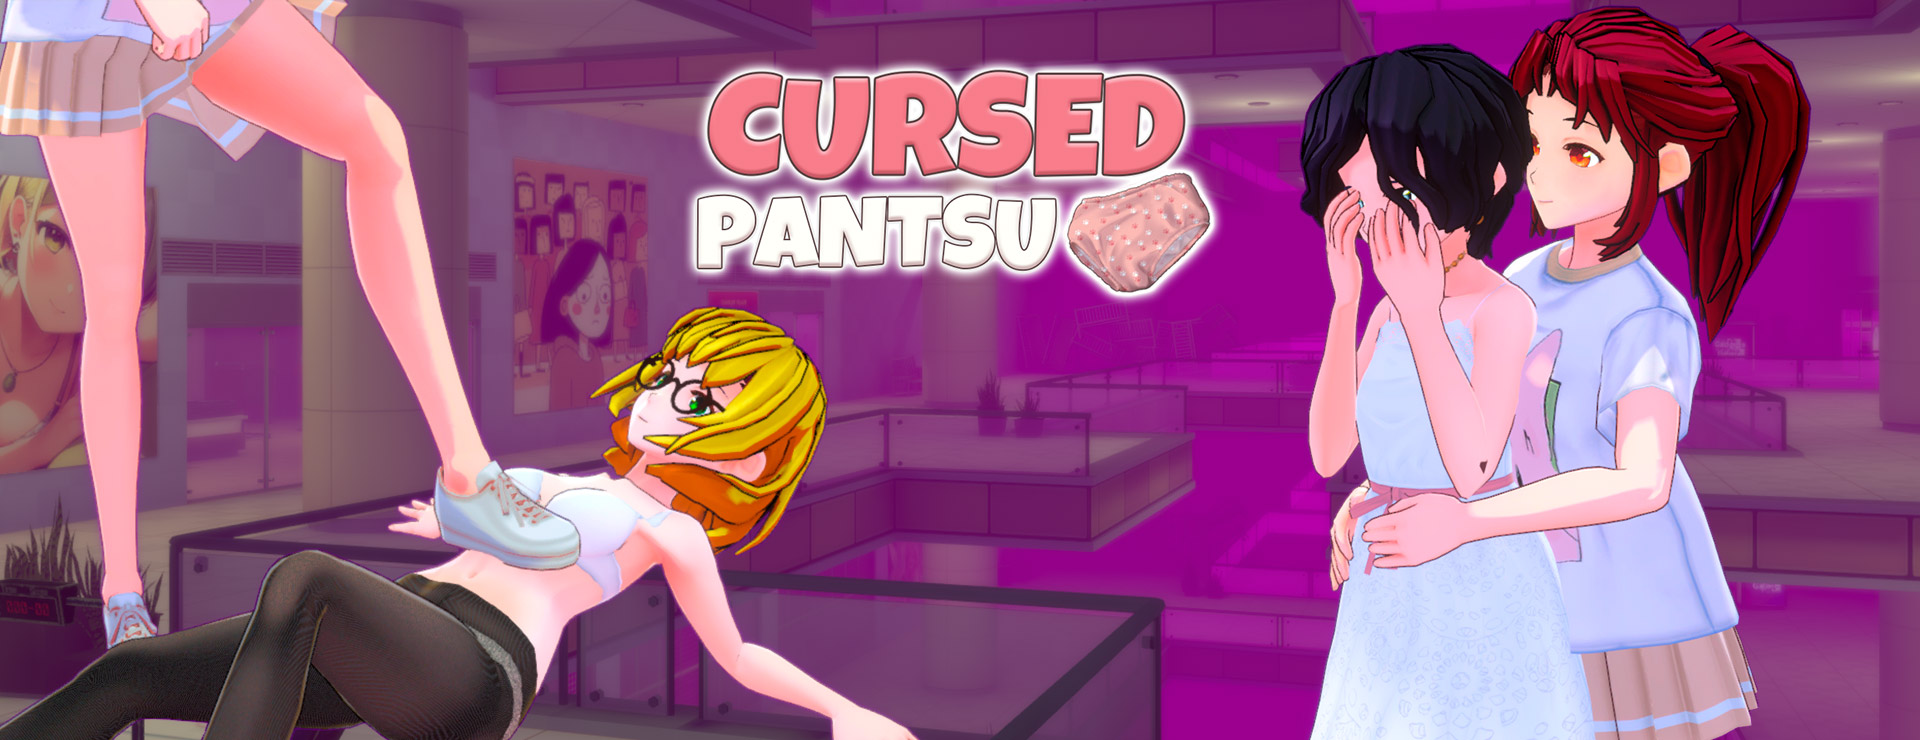 Cursed Pantsu - Action Adventure Game